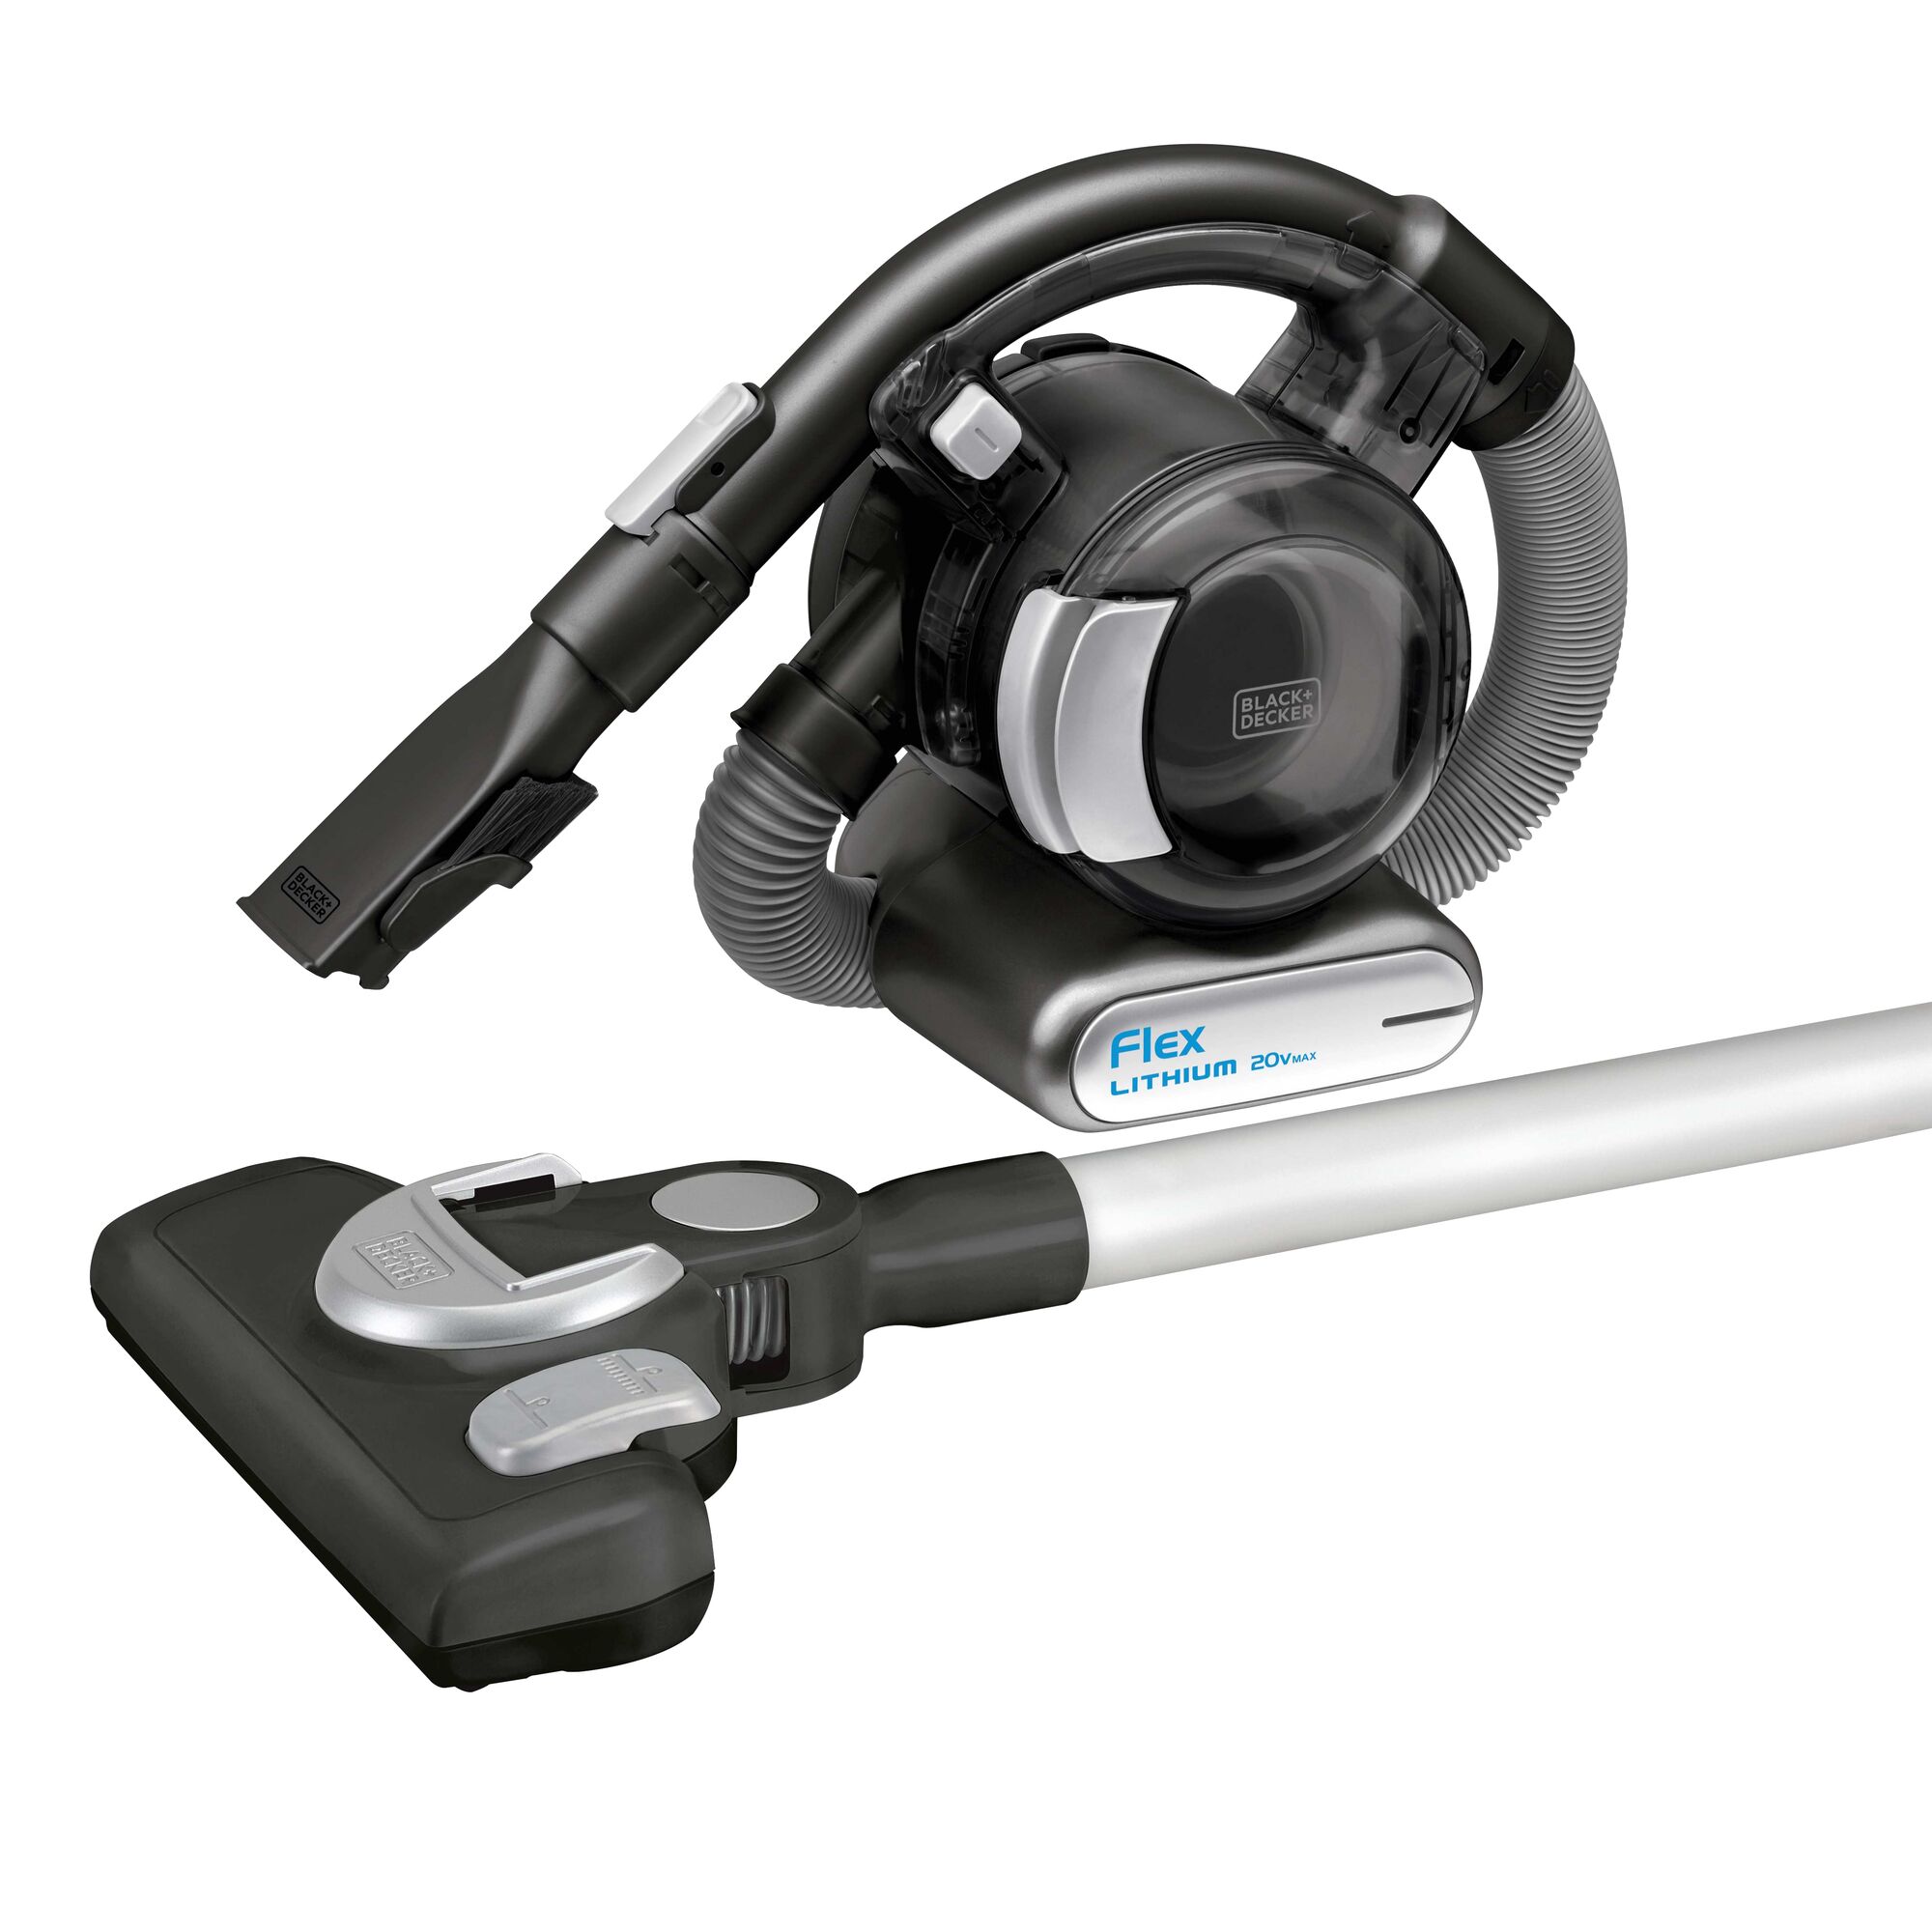 Profile of Dustbuster Flex Cordless Hand Vacuum with Floor Head plus Pet Hair Brush.